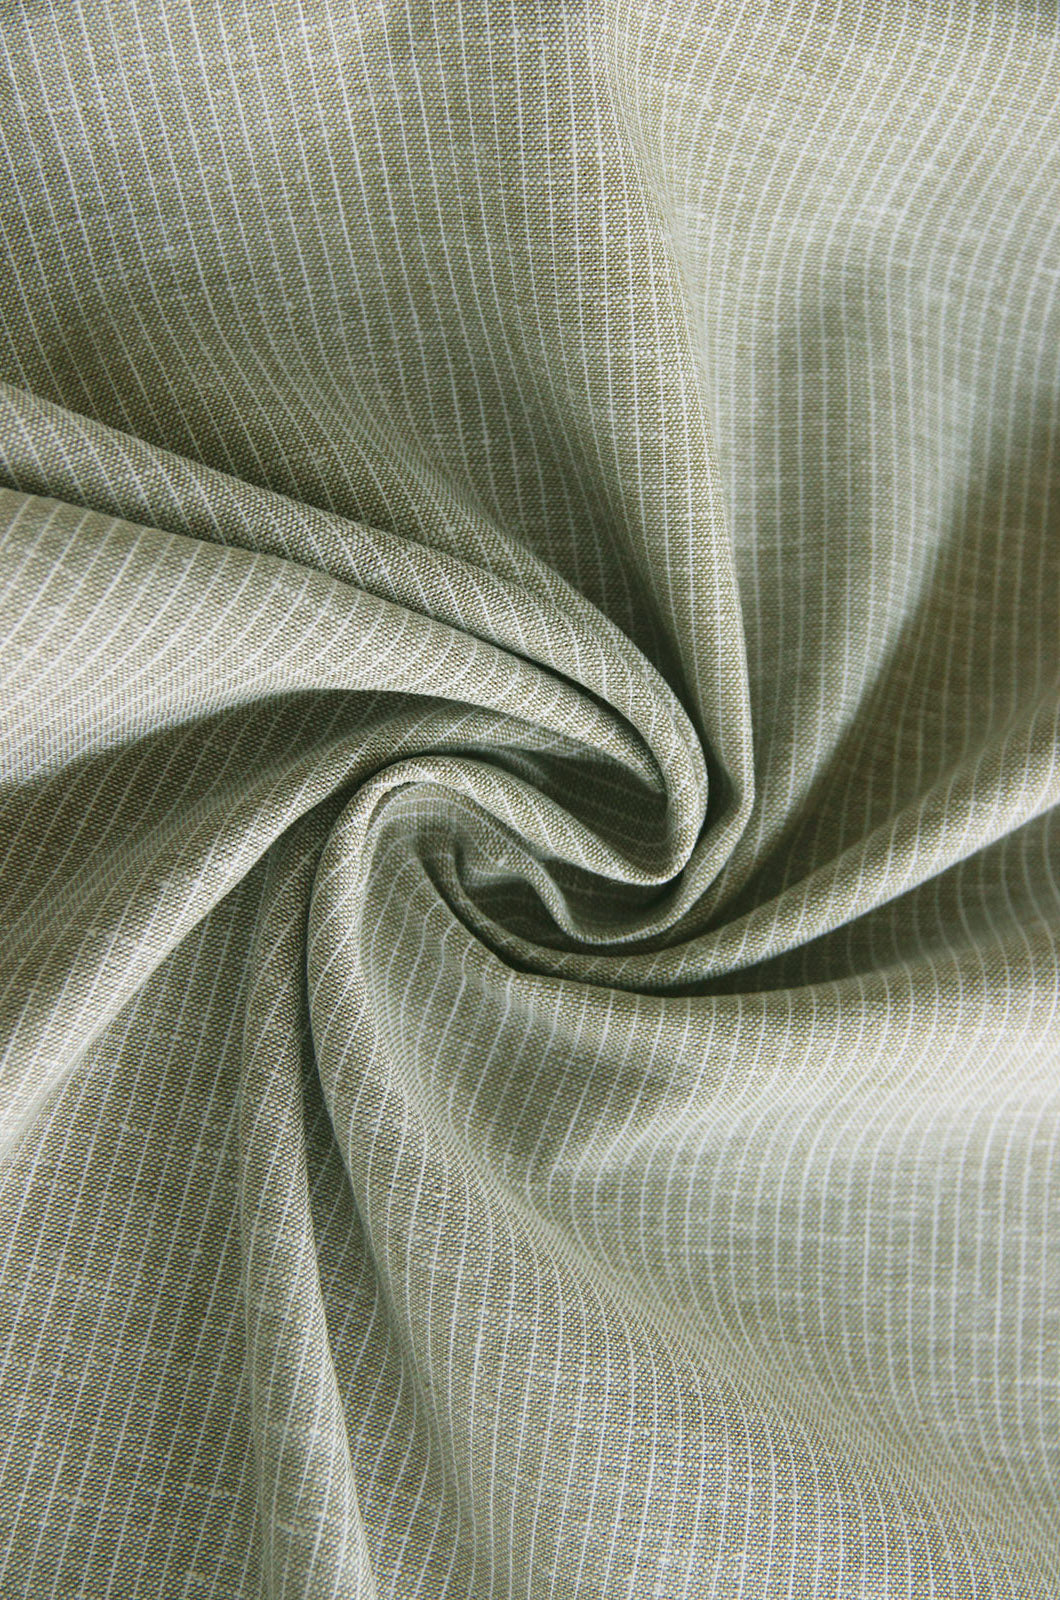 Buy 078-khaki Half linen patterned fine stripes * From 50 cm